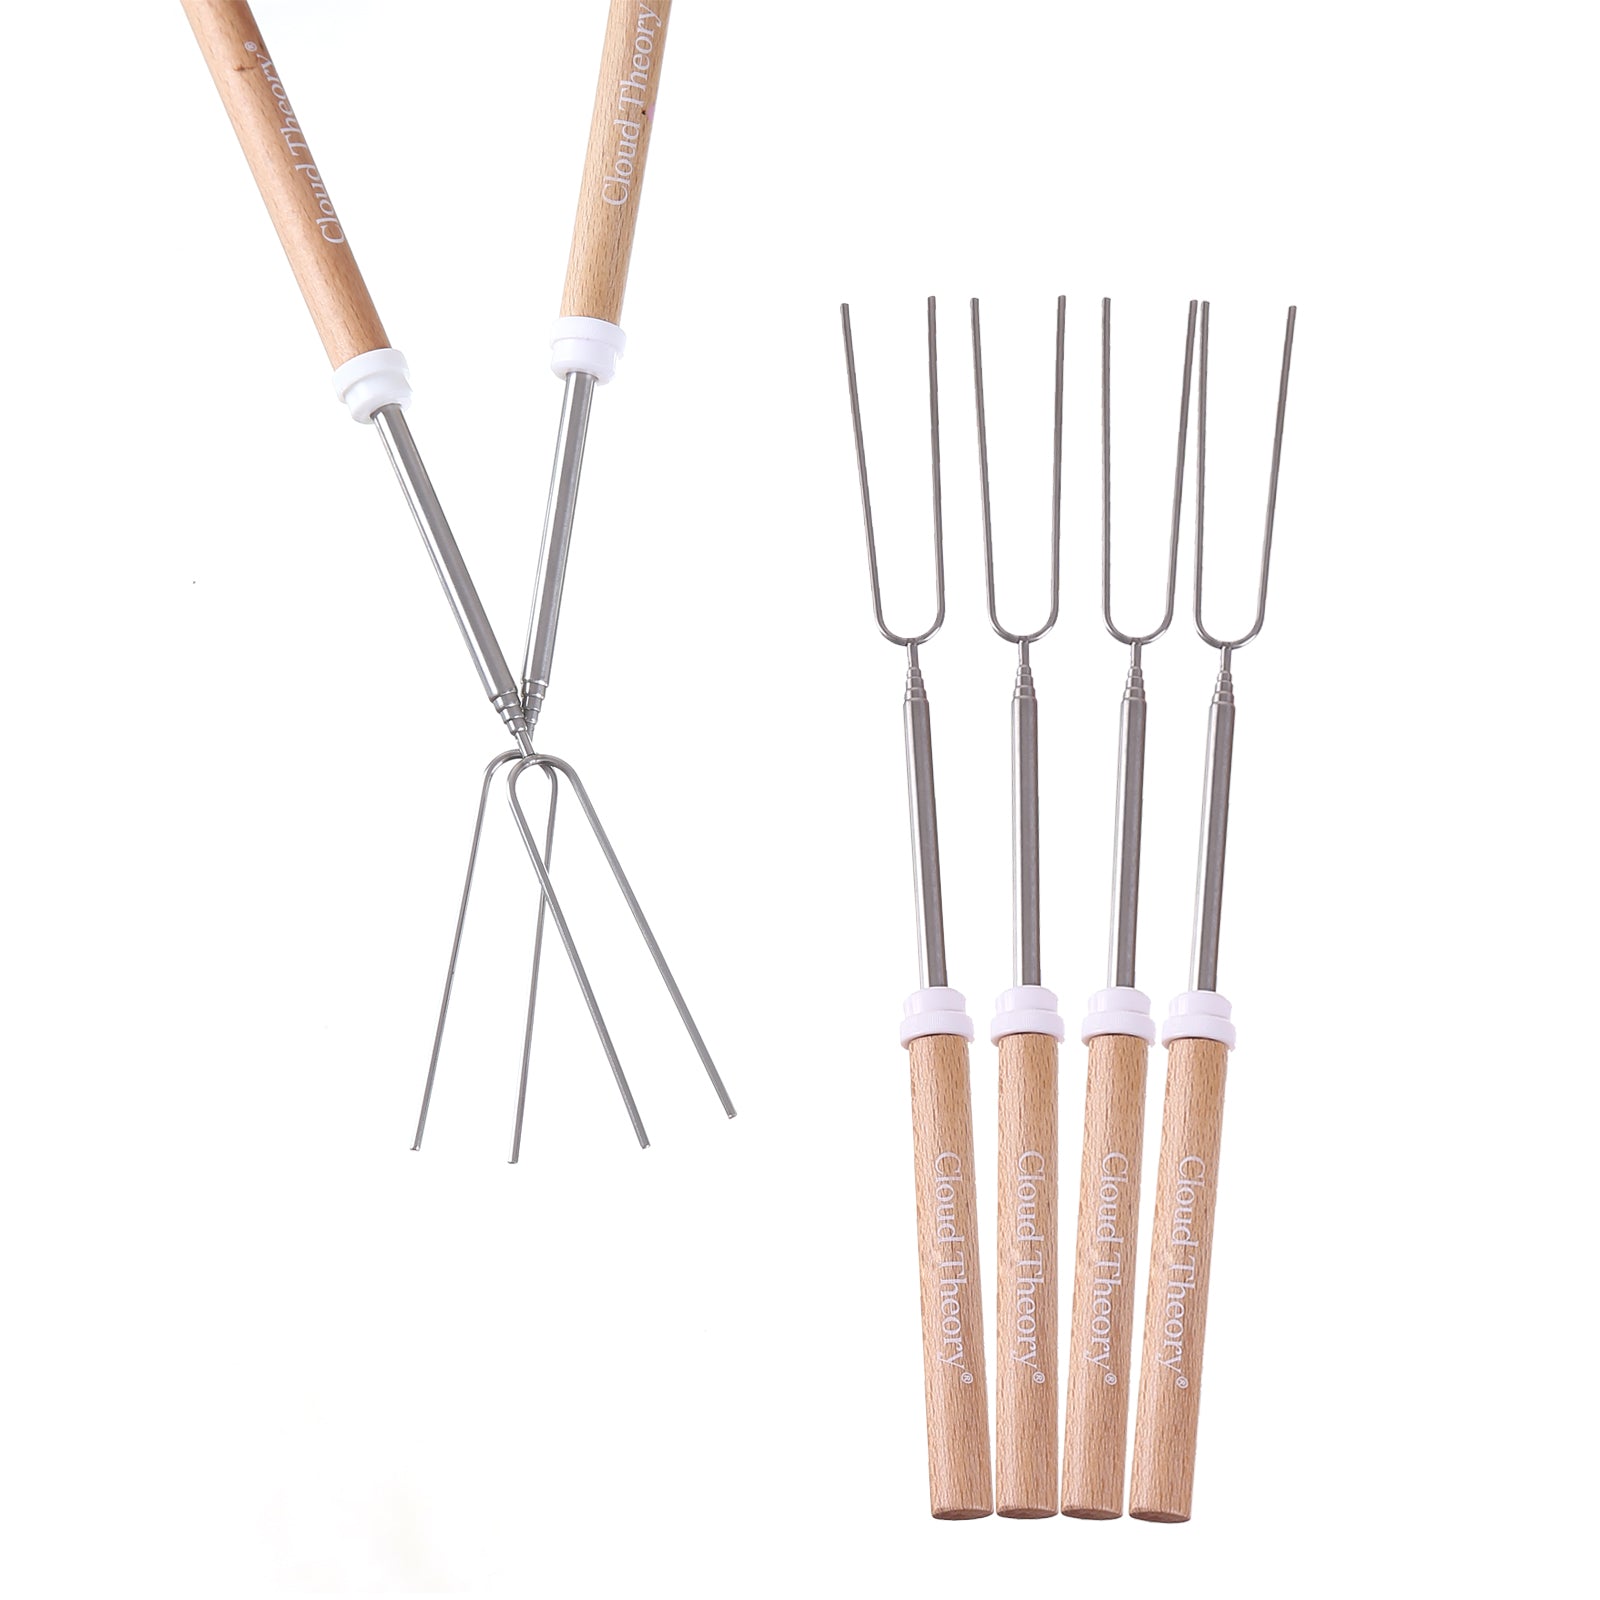 Marshmallow Toasting Sticks - 6 Pcs Set